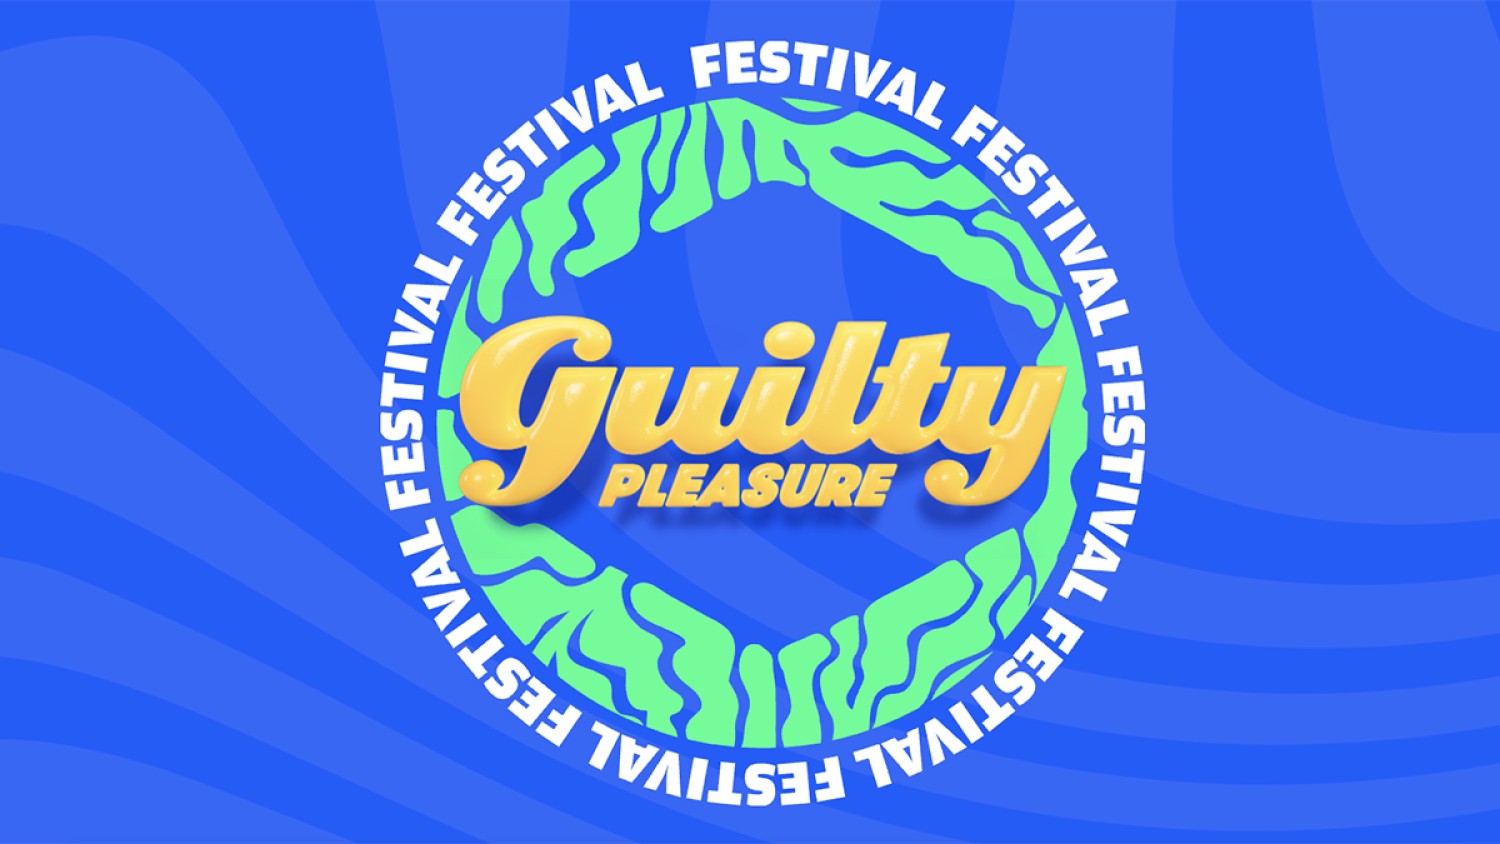 Guilty Pleasure Festival